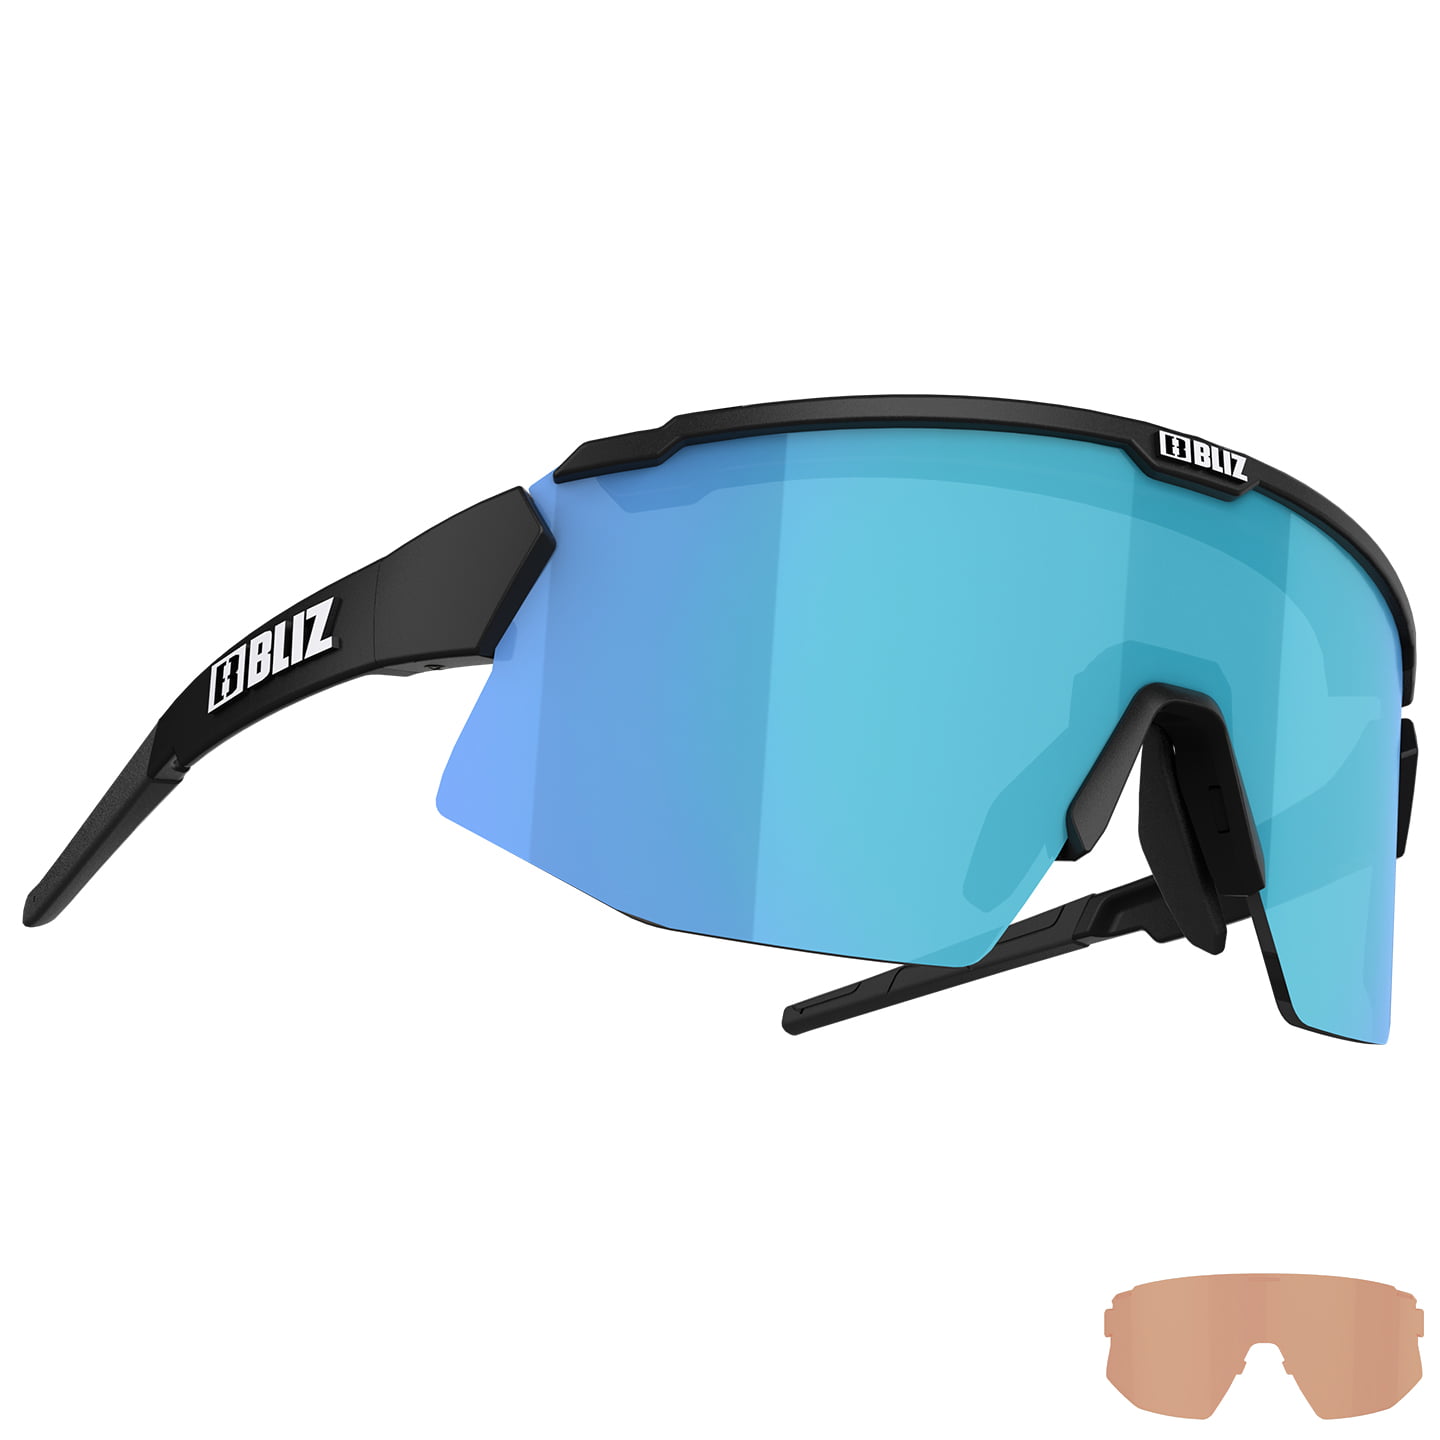 BLIZ Breeze 2023 Eyewear Set, Unisex (women / men), Cycle glasses, Bike accessories